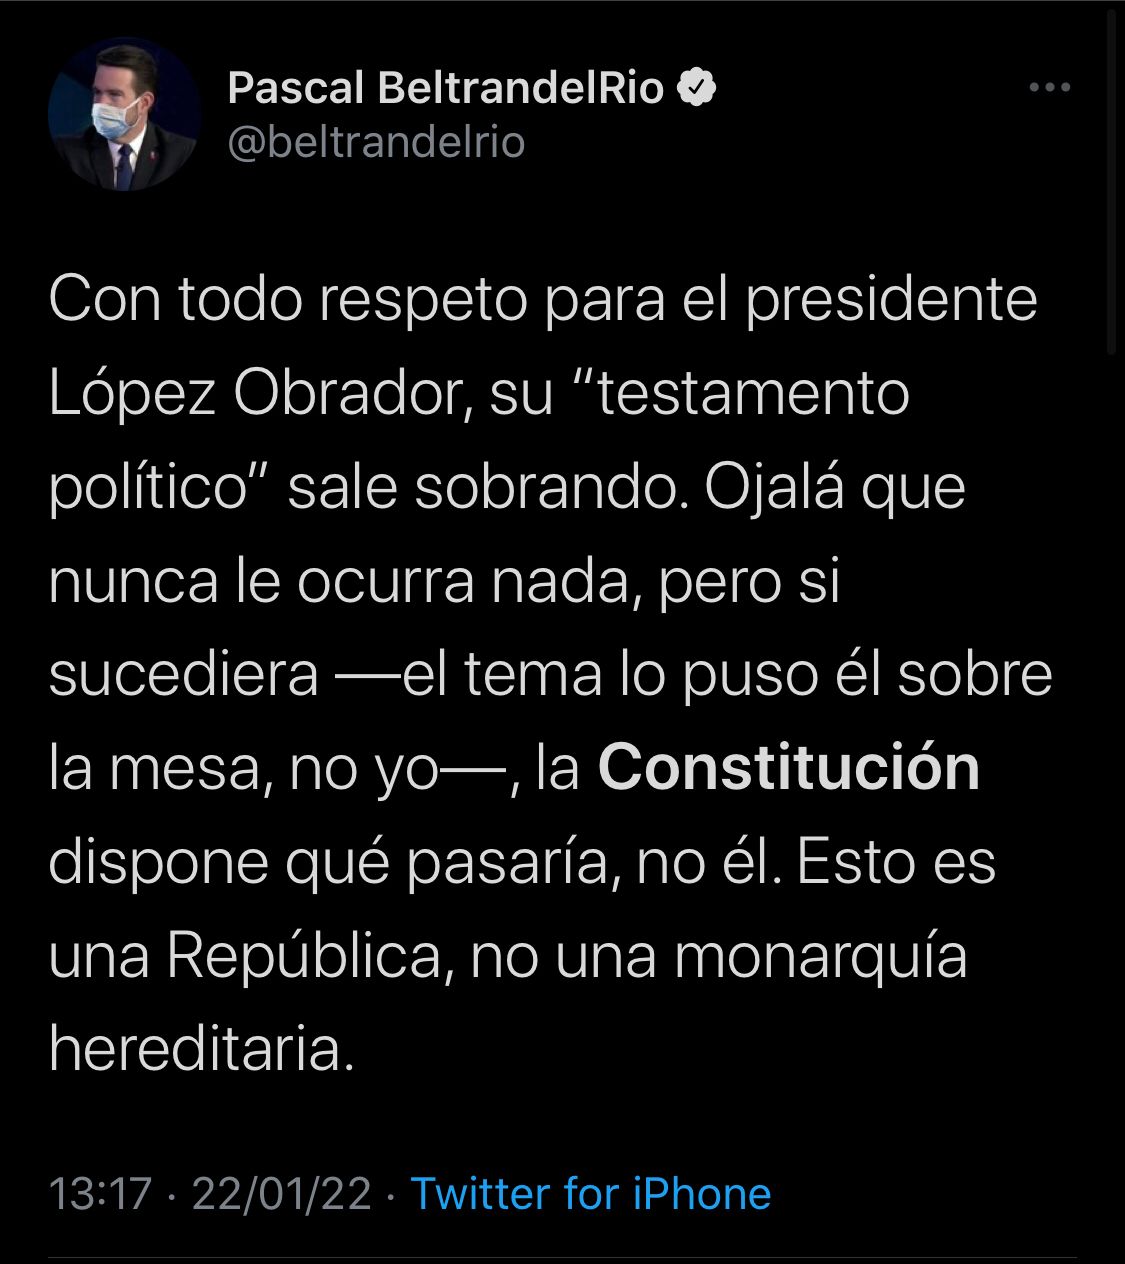 Pascal Beltrán del Río dijo que “con todo respeto para López Obrador”, su documento sale sobrando (Foto: Twitter/@beltrandelrio)